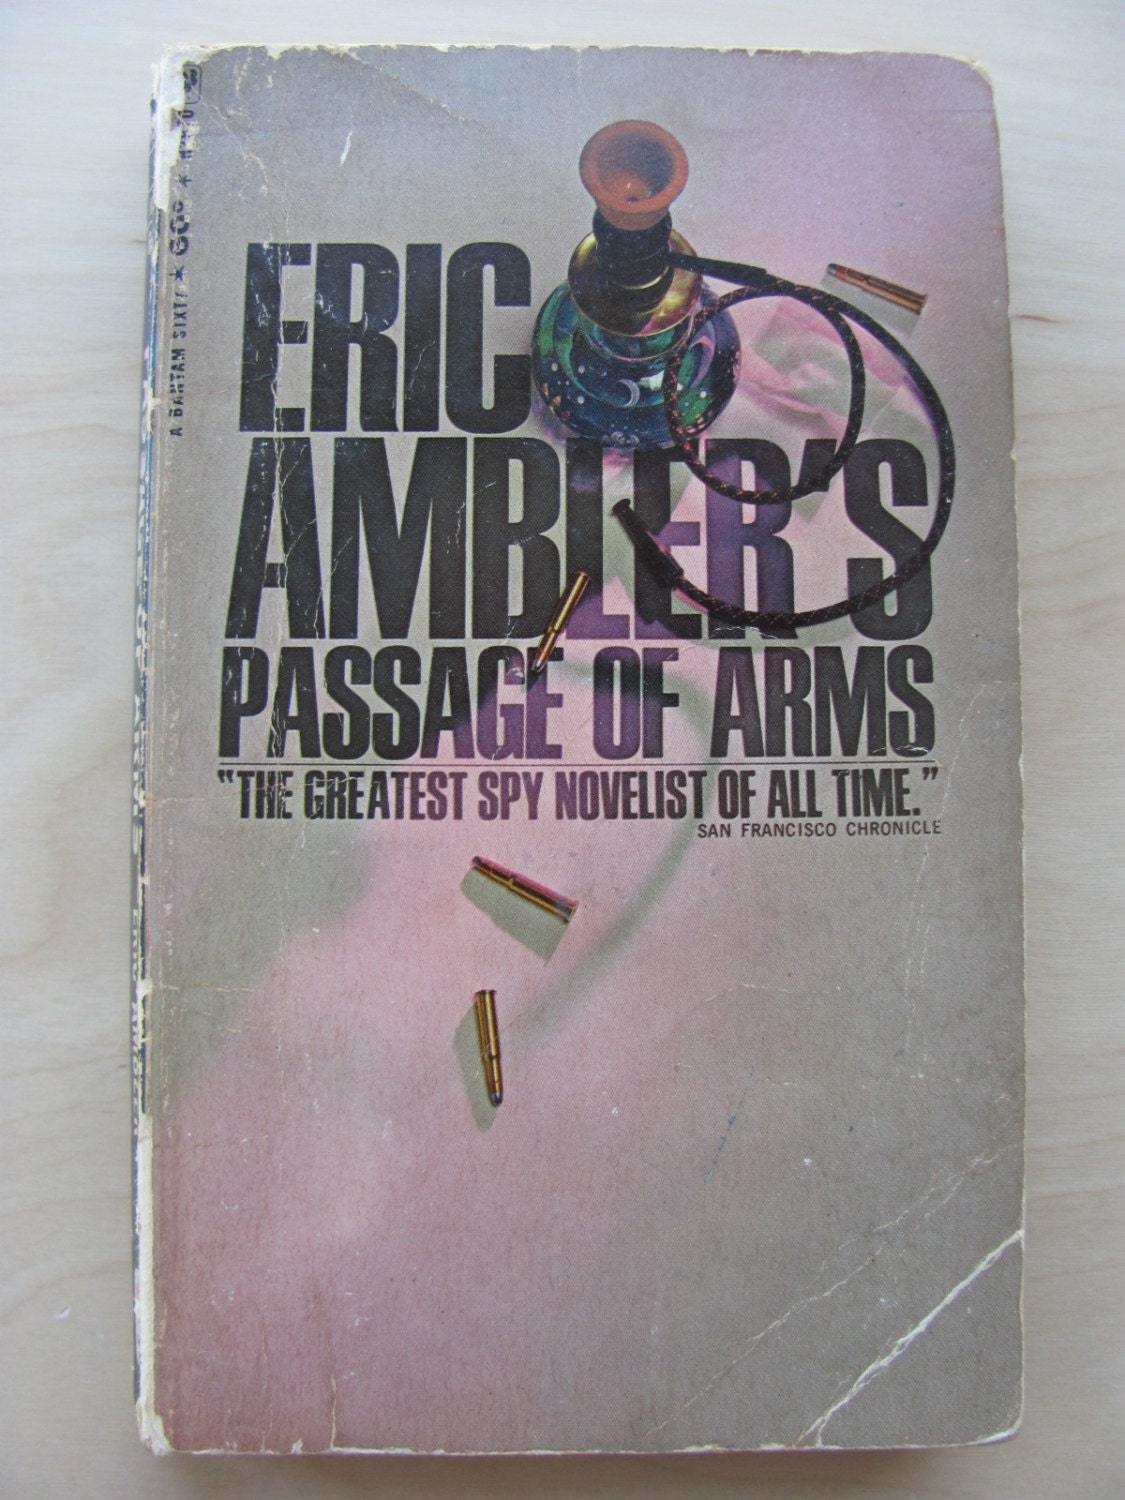 Vintage Paperback Book Passage of Arms Eric Ambler Fiction pic